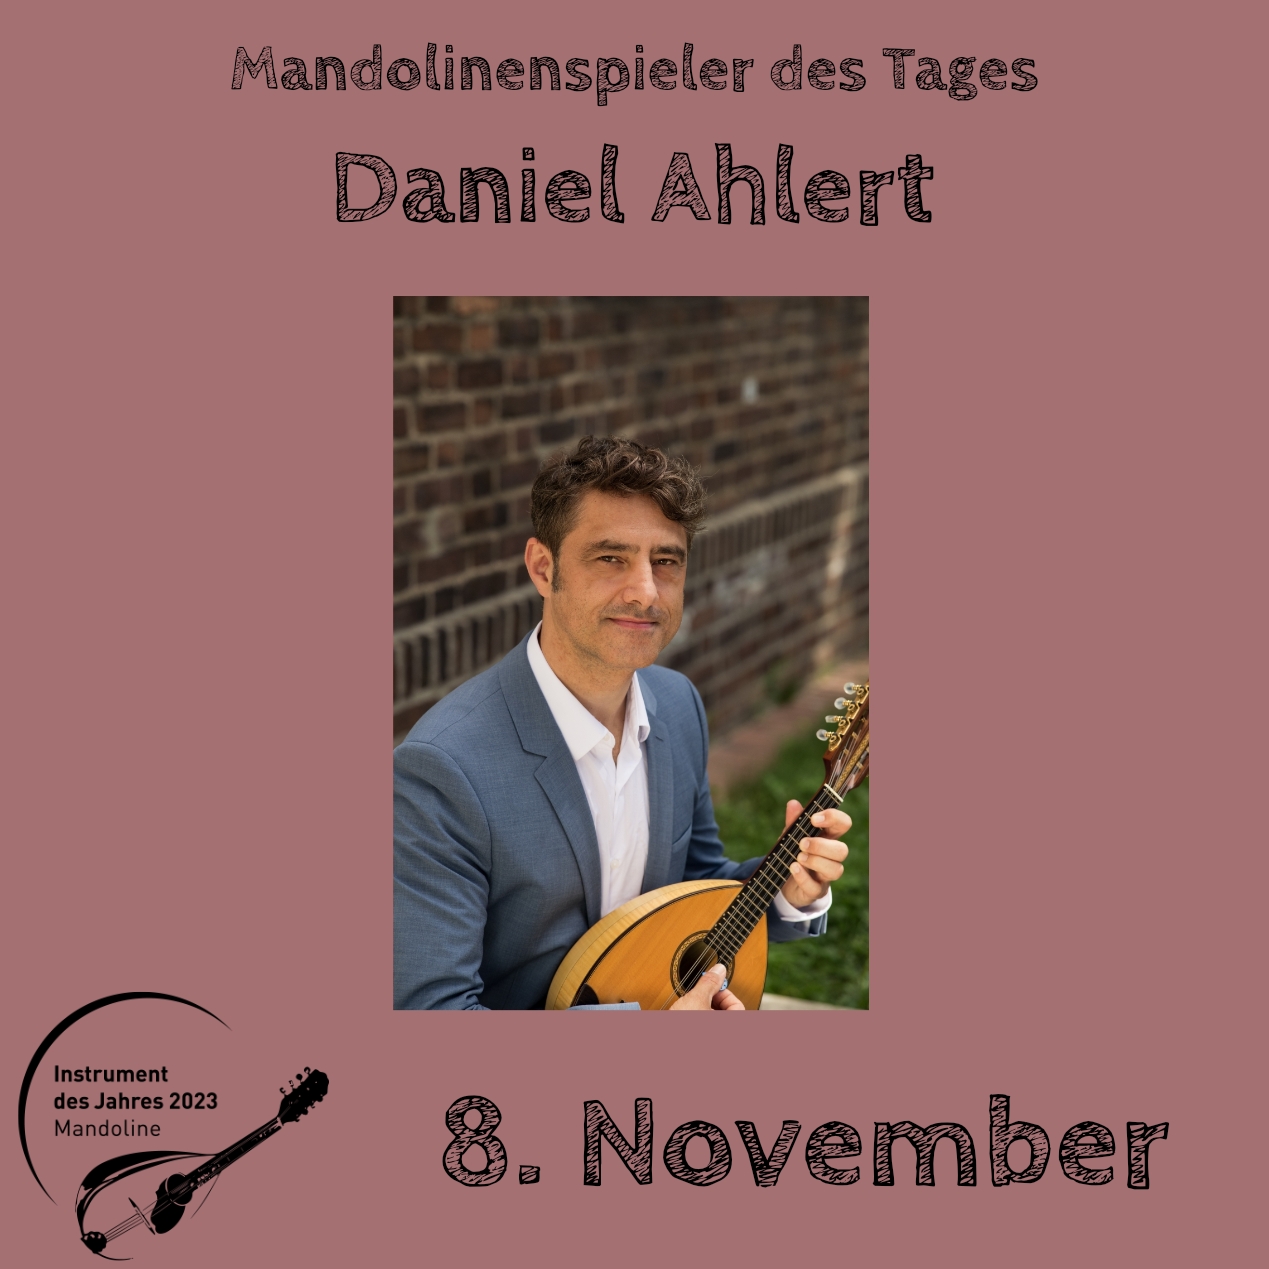 8. November - Daniel Ahlert Instrument des Jahres 2023 Mandolinenspieler Mandolinenspielerin des Tages